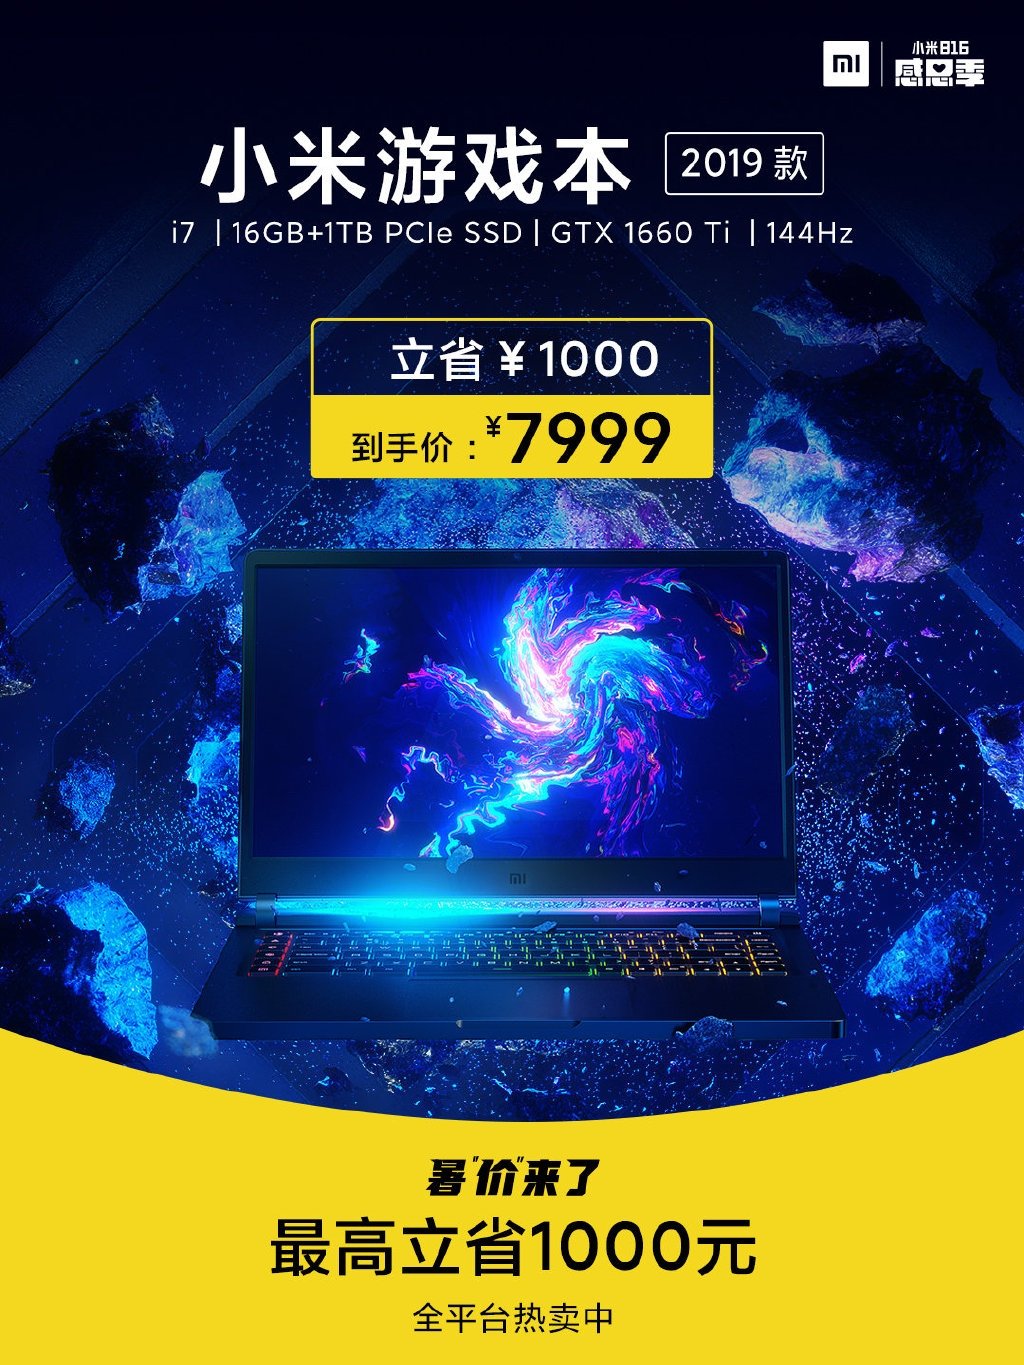 Xiaomi Mi Gaming Laptop 2019 İndirimi 